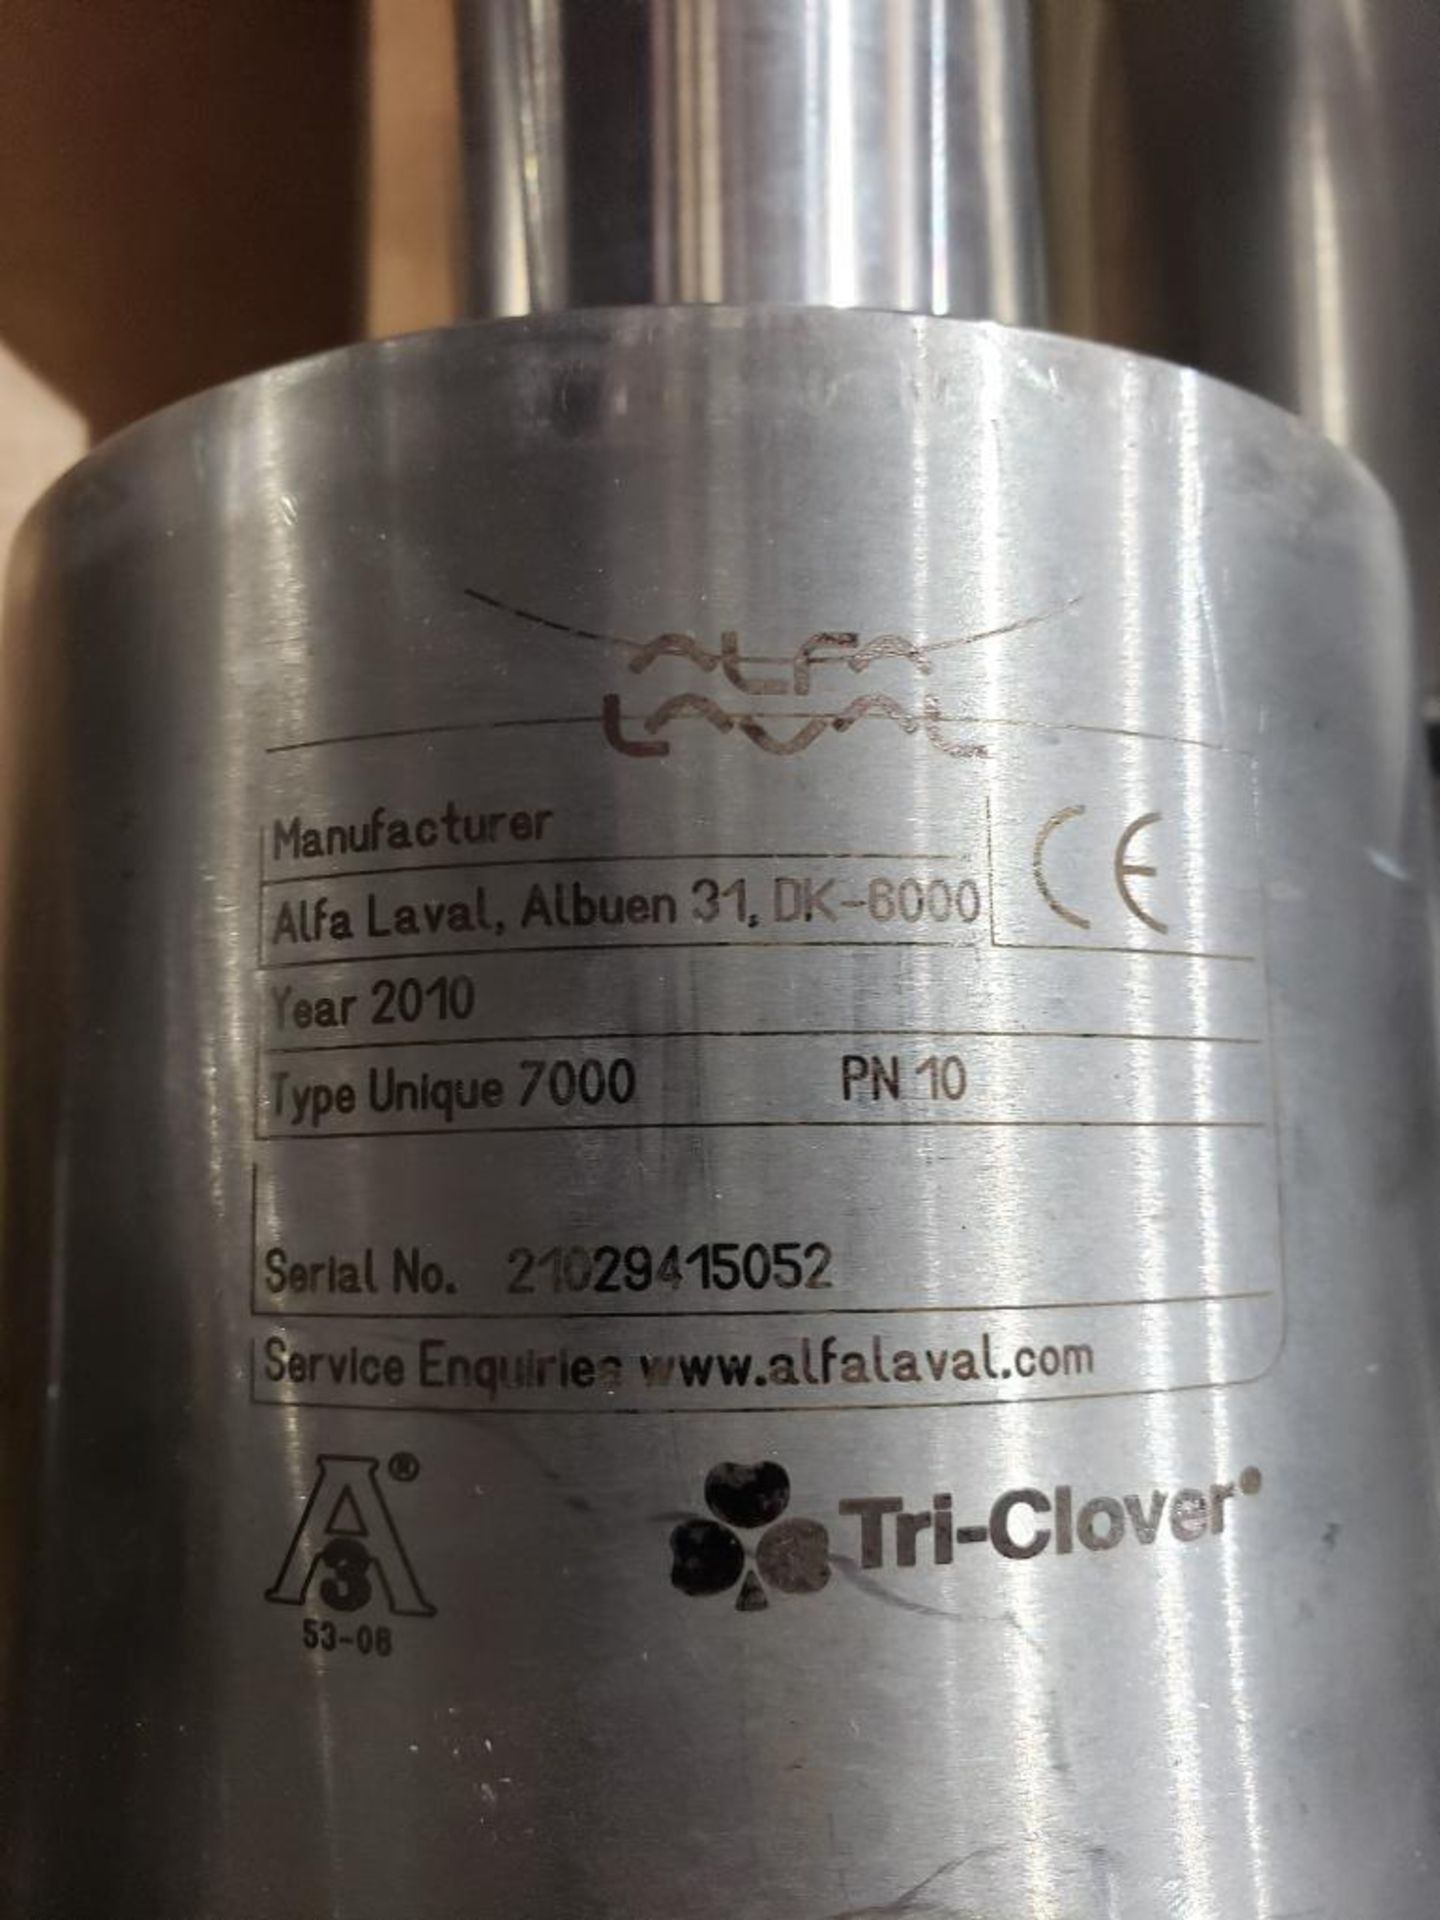 Qty 3 - Tri-Clover Alfa Laval valves. - Image 3 of 5